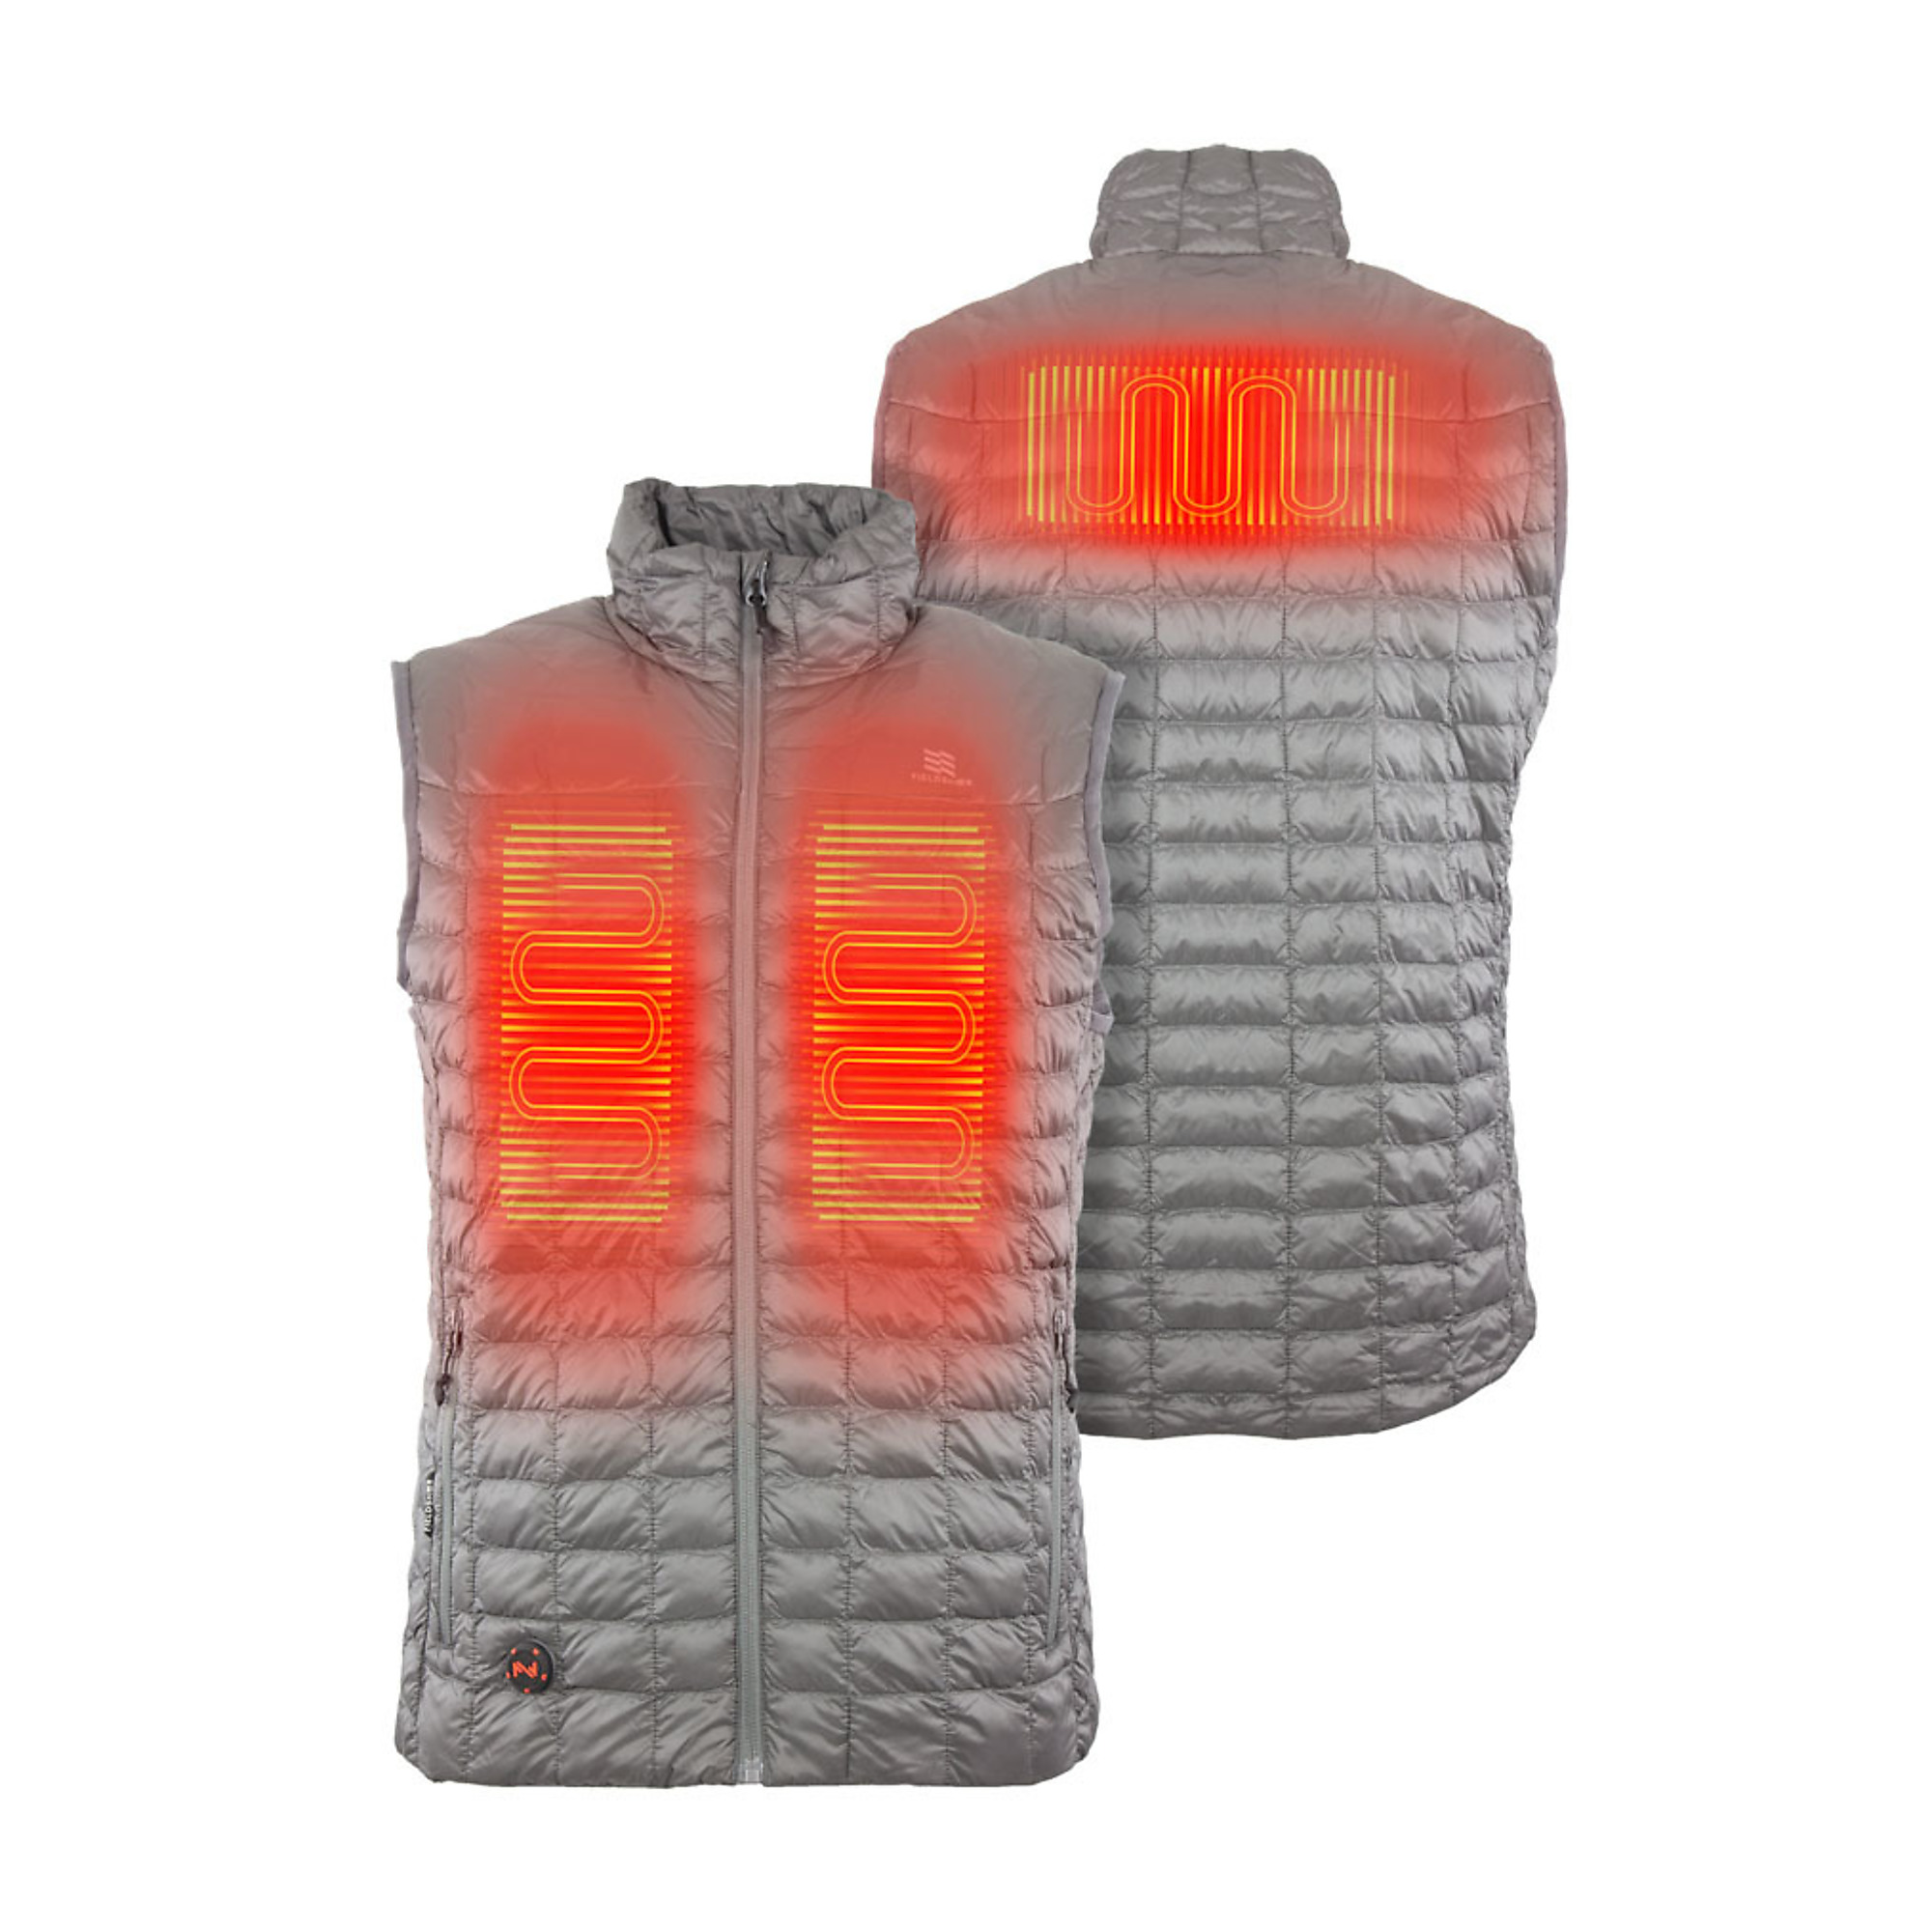 Fieldsheer, Men's Backcountry Heated Vest with 7.4v Battery, Size 3XL, Color Grey, Model MWMV04320720